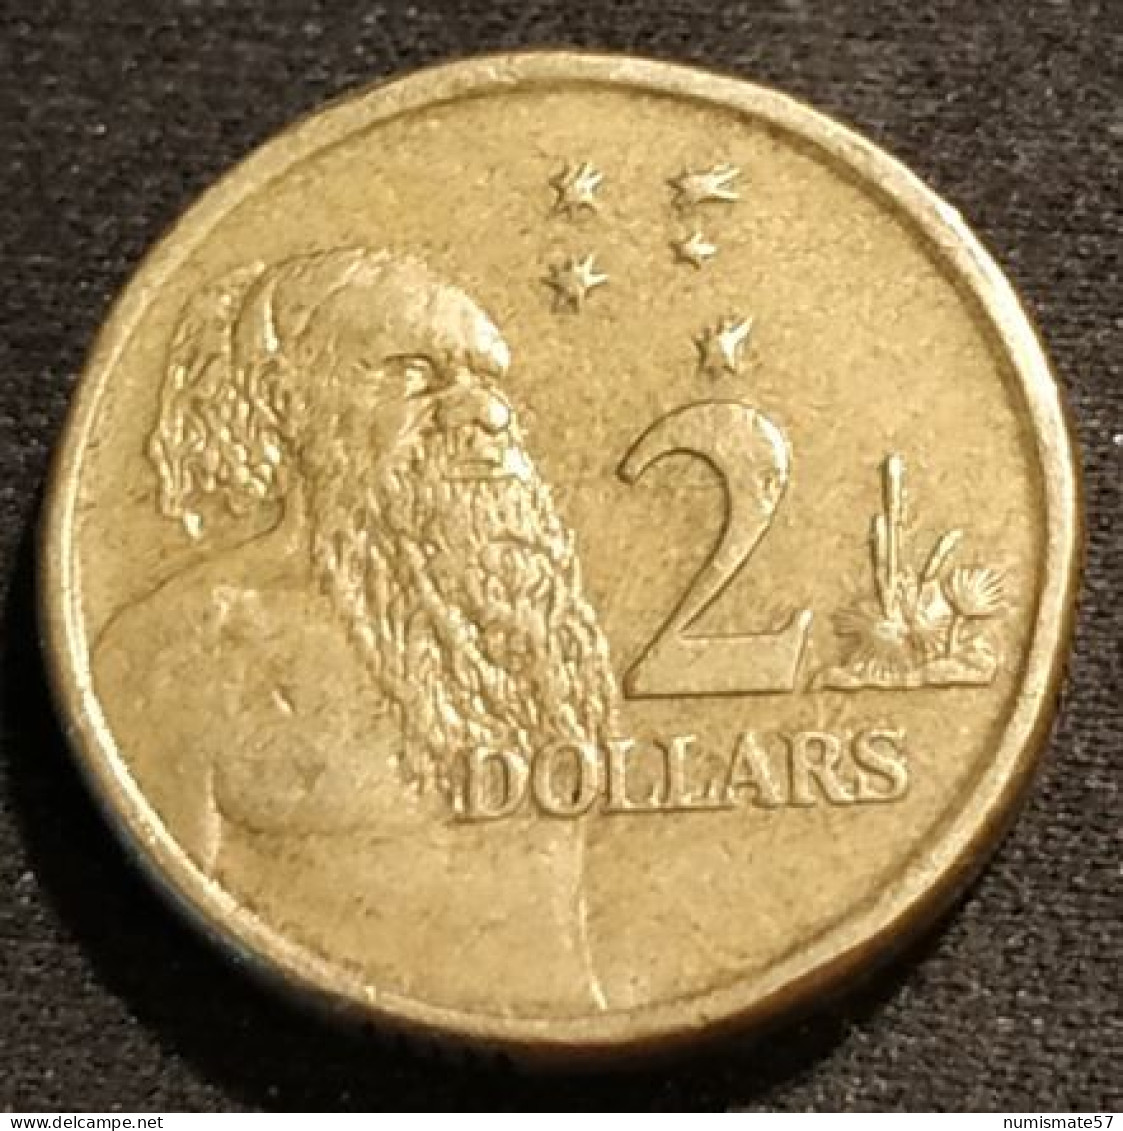 AUSTRALIE - AUSTRALIA - 2 DOLLARS 2001 - Elizabeth II - 4e Effigie - KM 406 - 2 Dollars